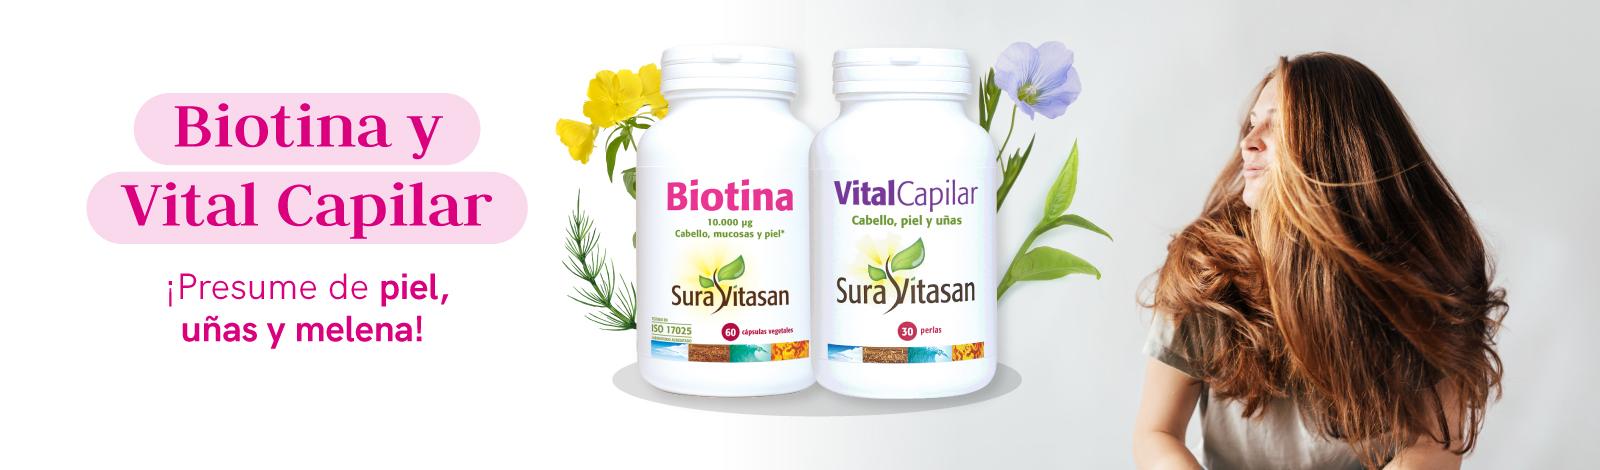 Vital Capilar + Biotina